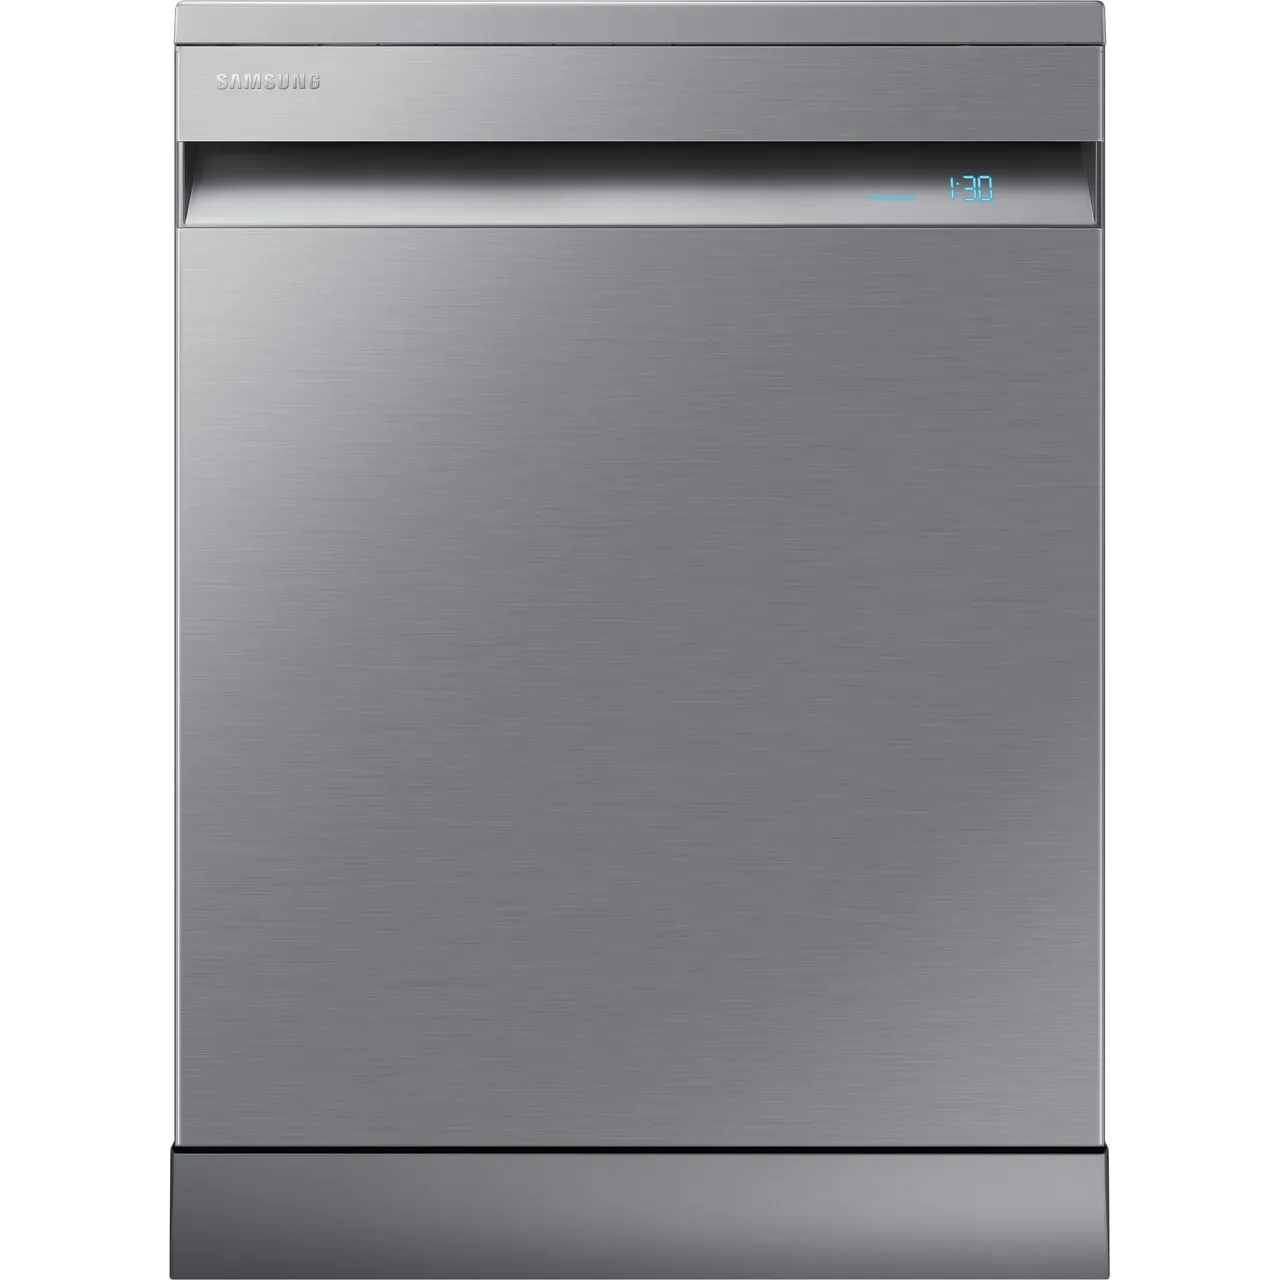 Samsung DW60A8060FS Dishwasher 60cm Stainless Steel REFURBISHED